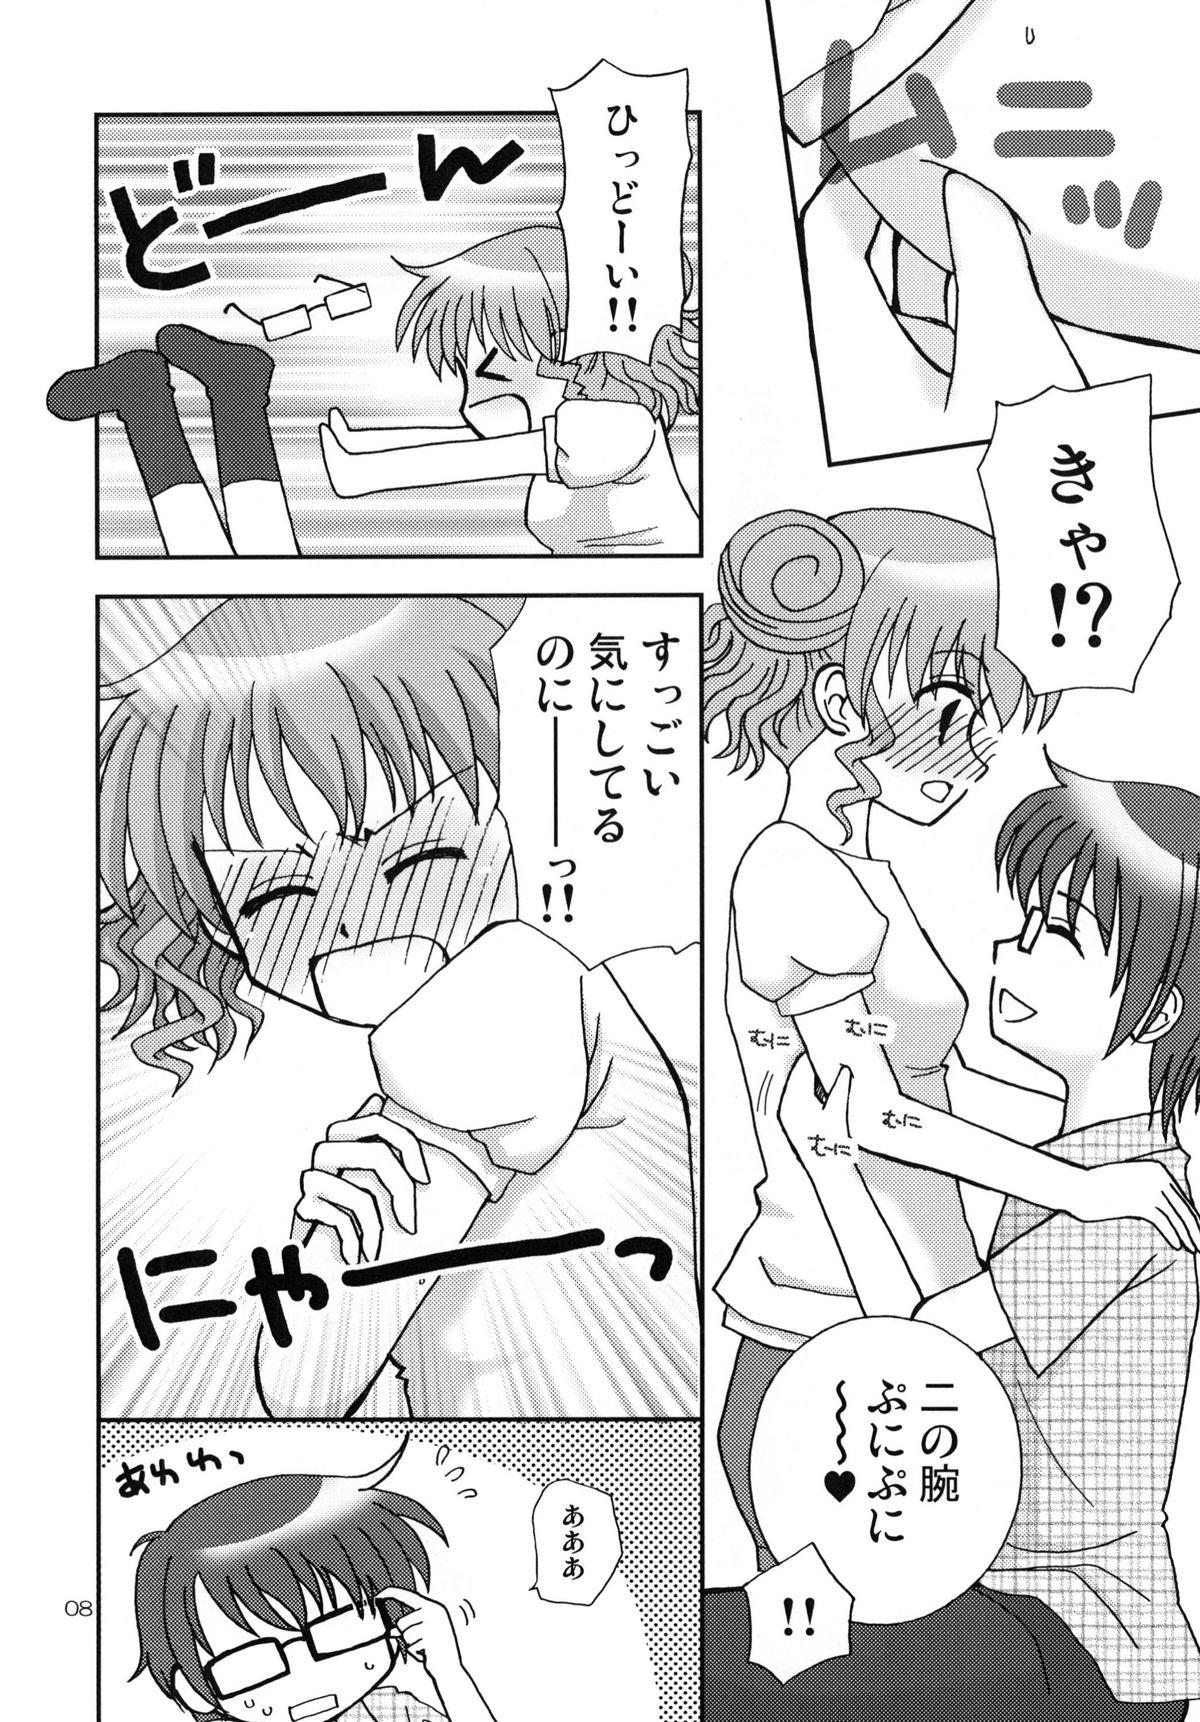 Banging Onnanoko Puzzle 2 - Hidamari sketch Jap - Page 8